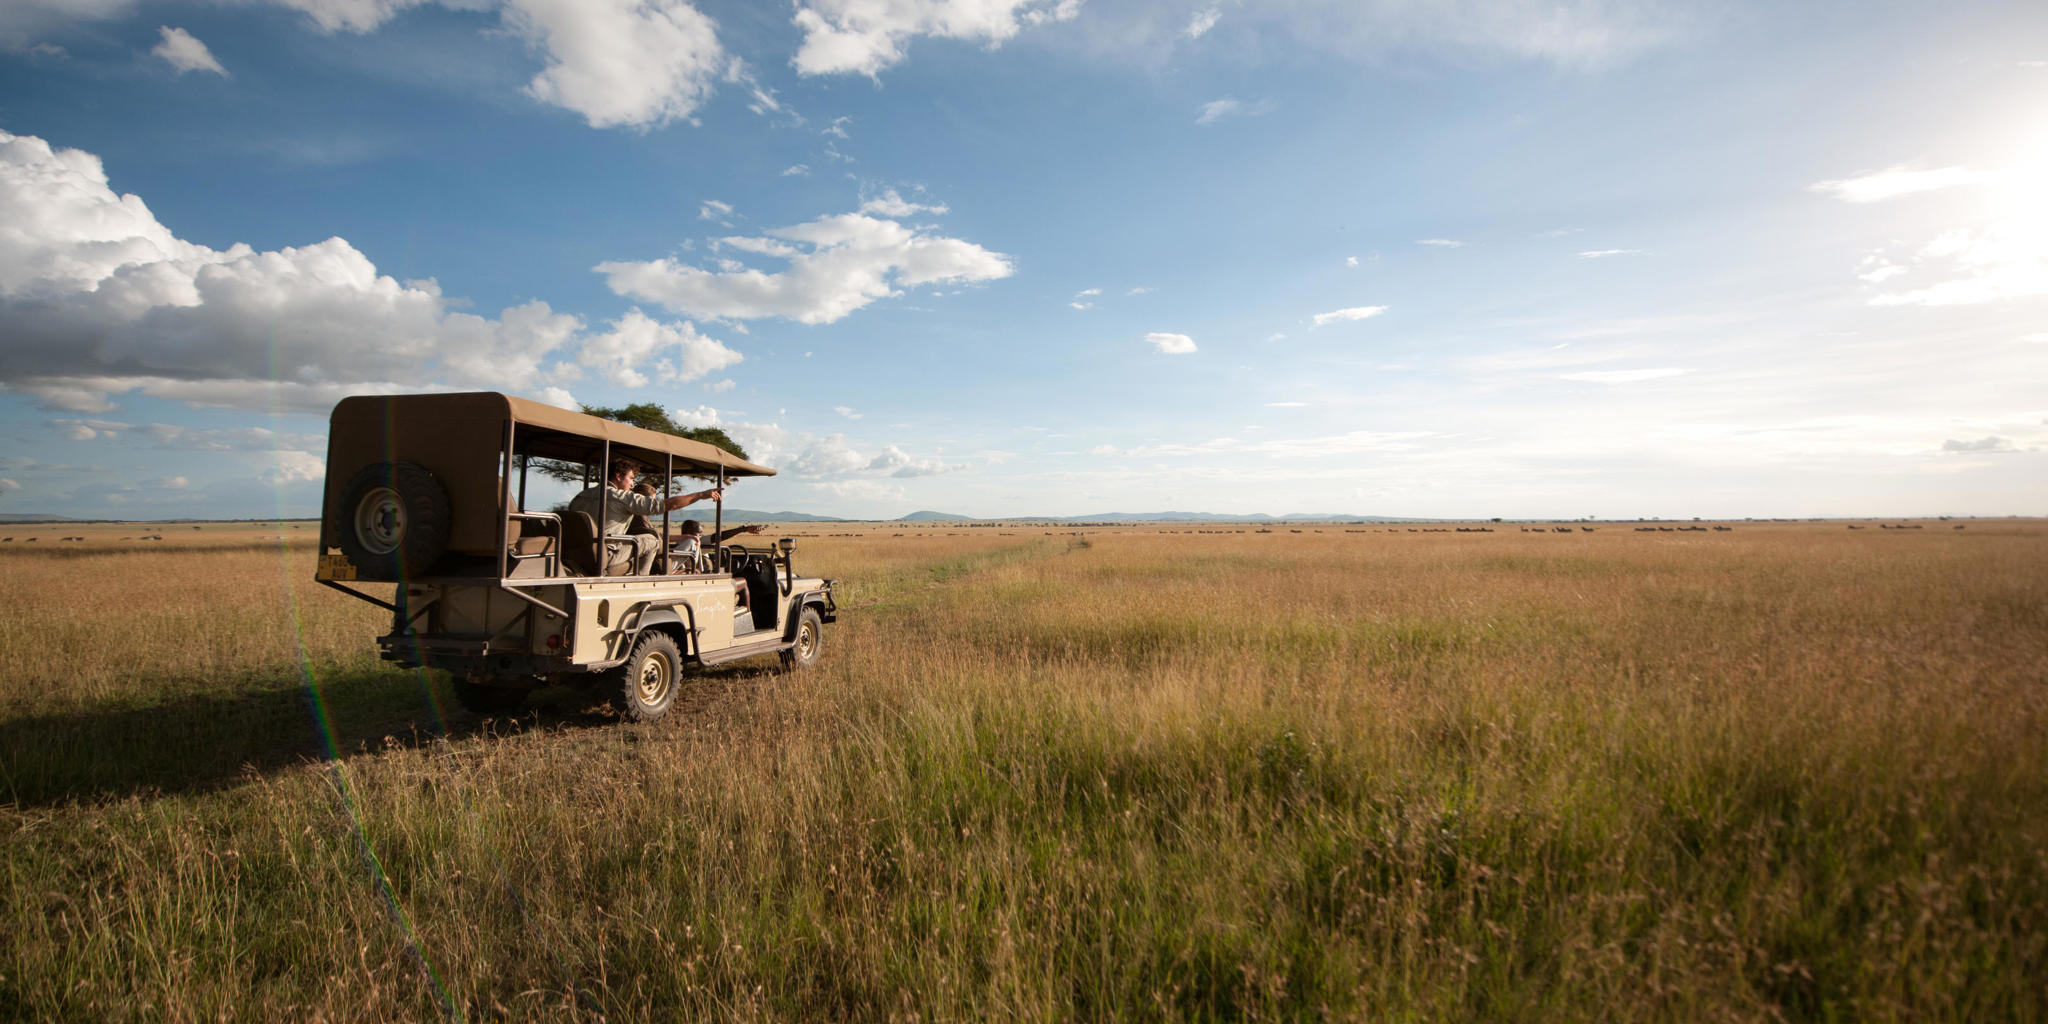 Game drives in the Serengeti, Tanzania experiences